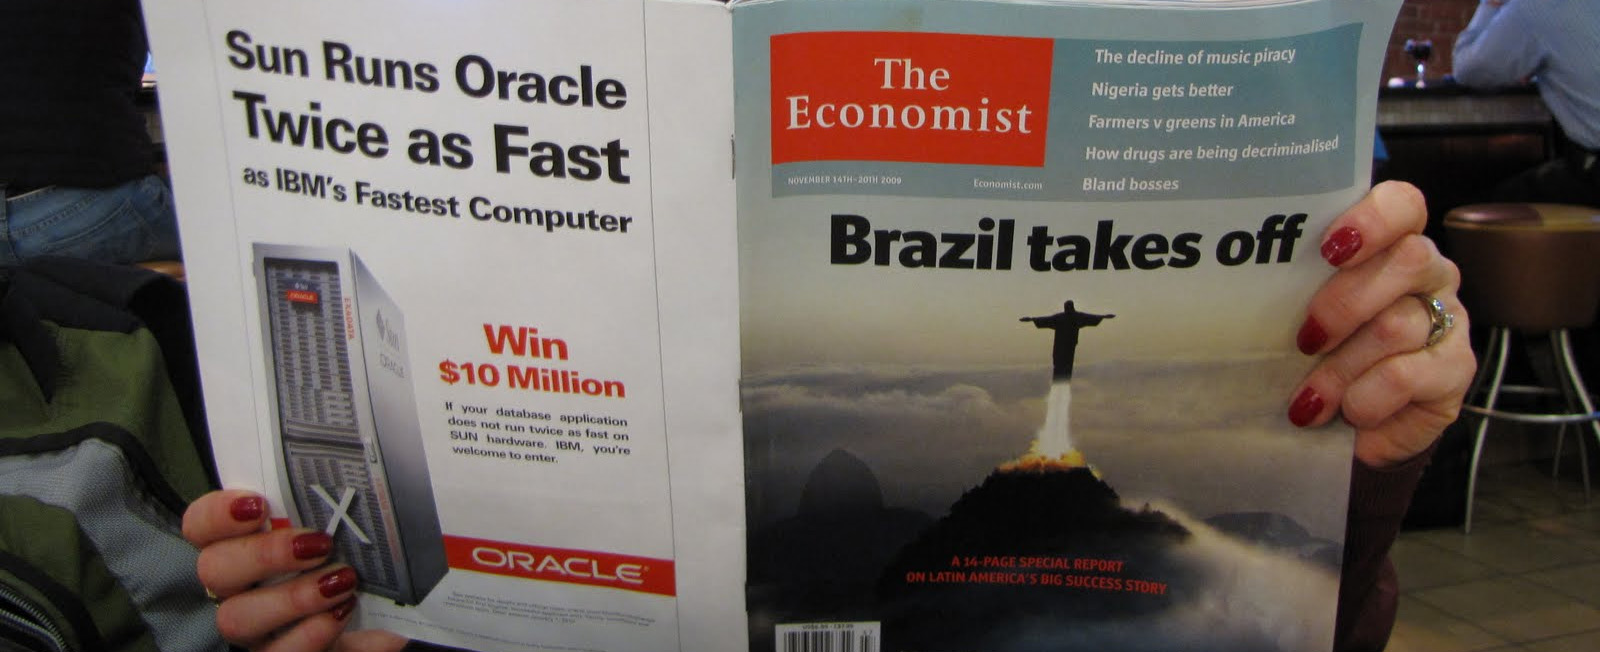 Brazil-Takes-Off-The-Economist.jpg